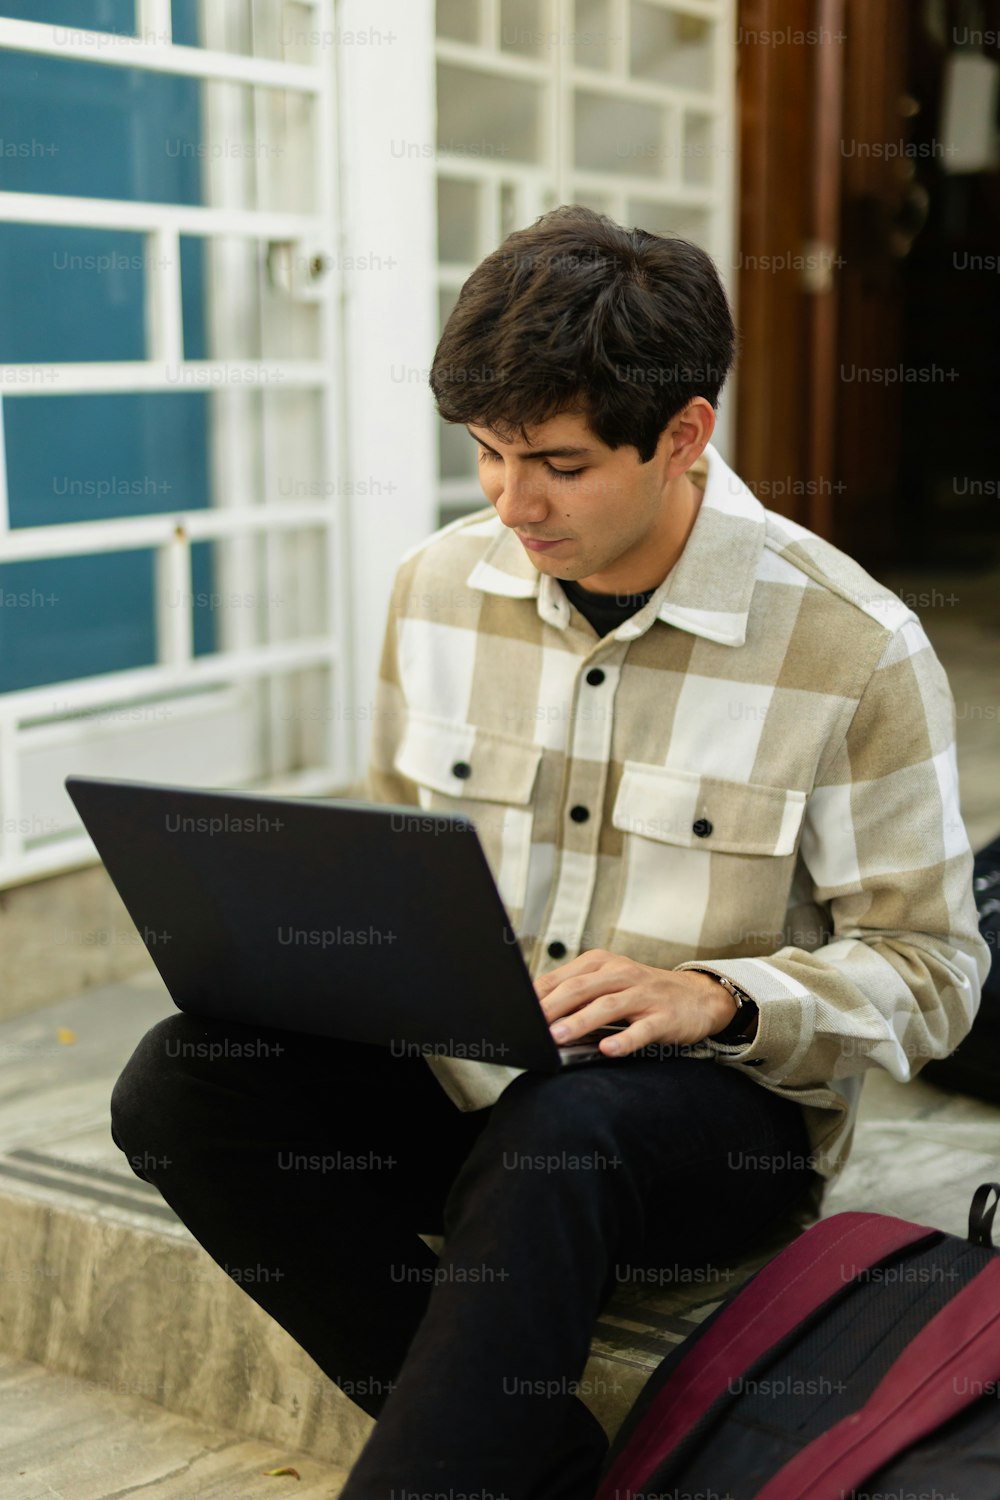 Un hombre sentado en un escalón usando una computadora portátil